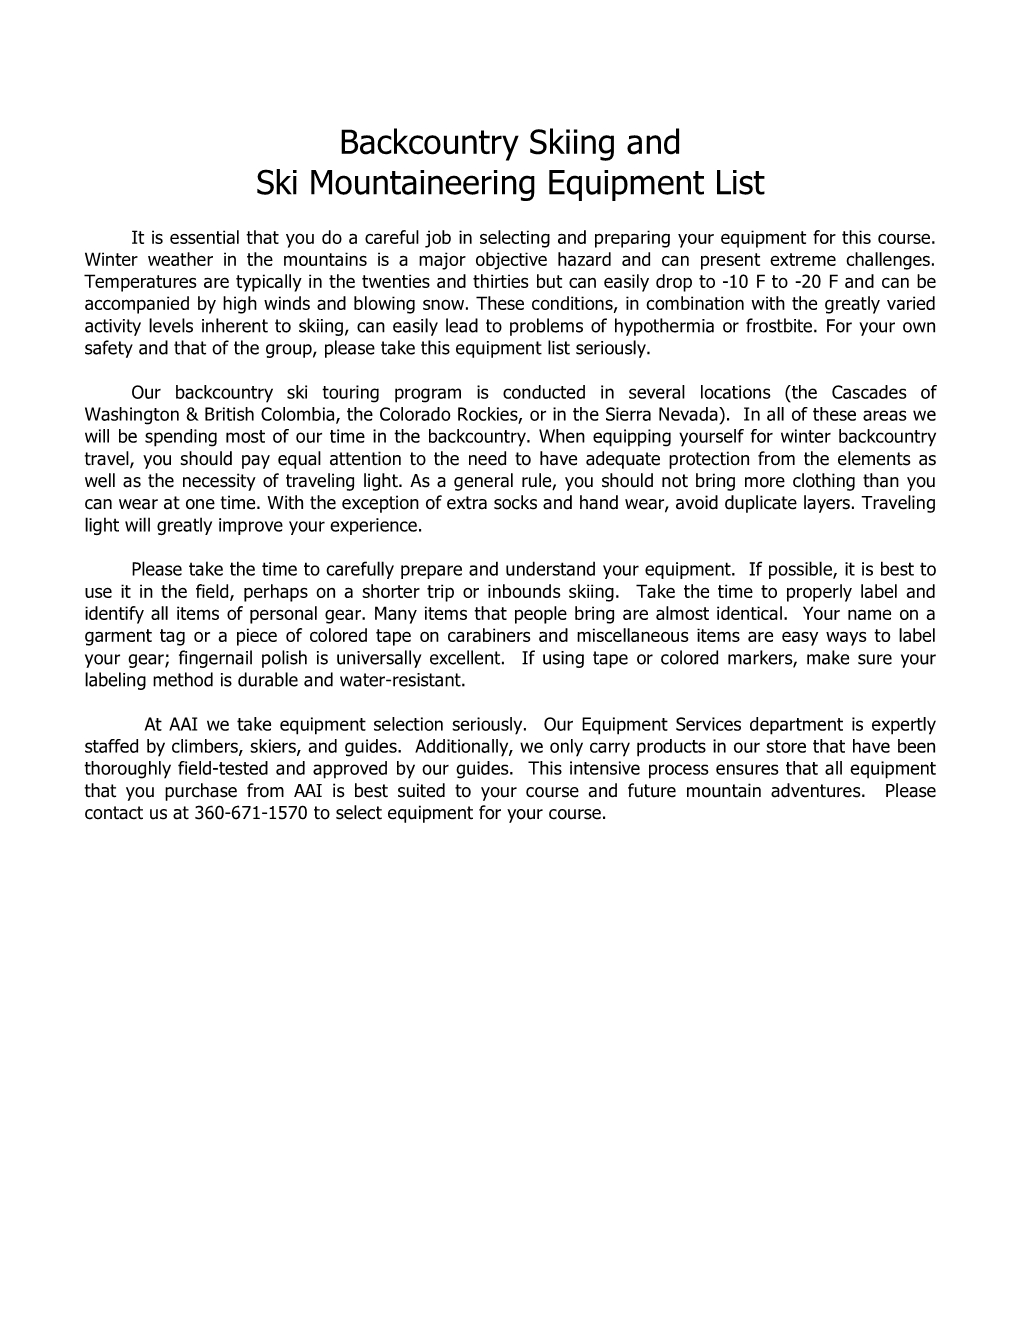 Backcountry Skiing and Ski Mountaineering Equipment List